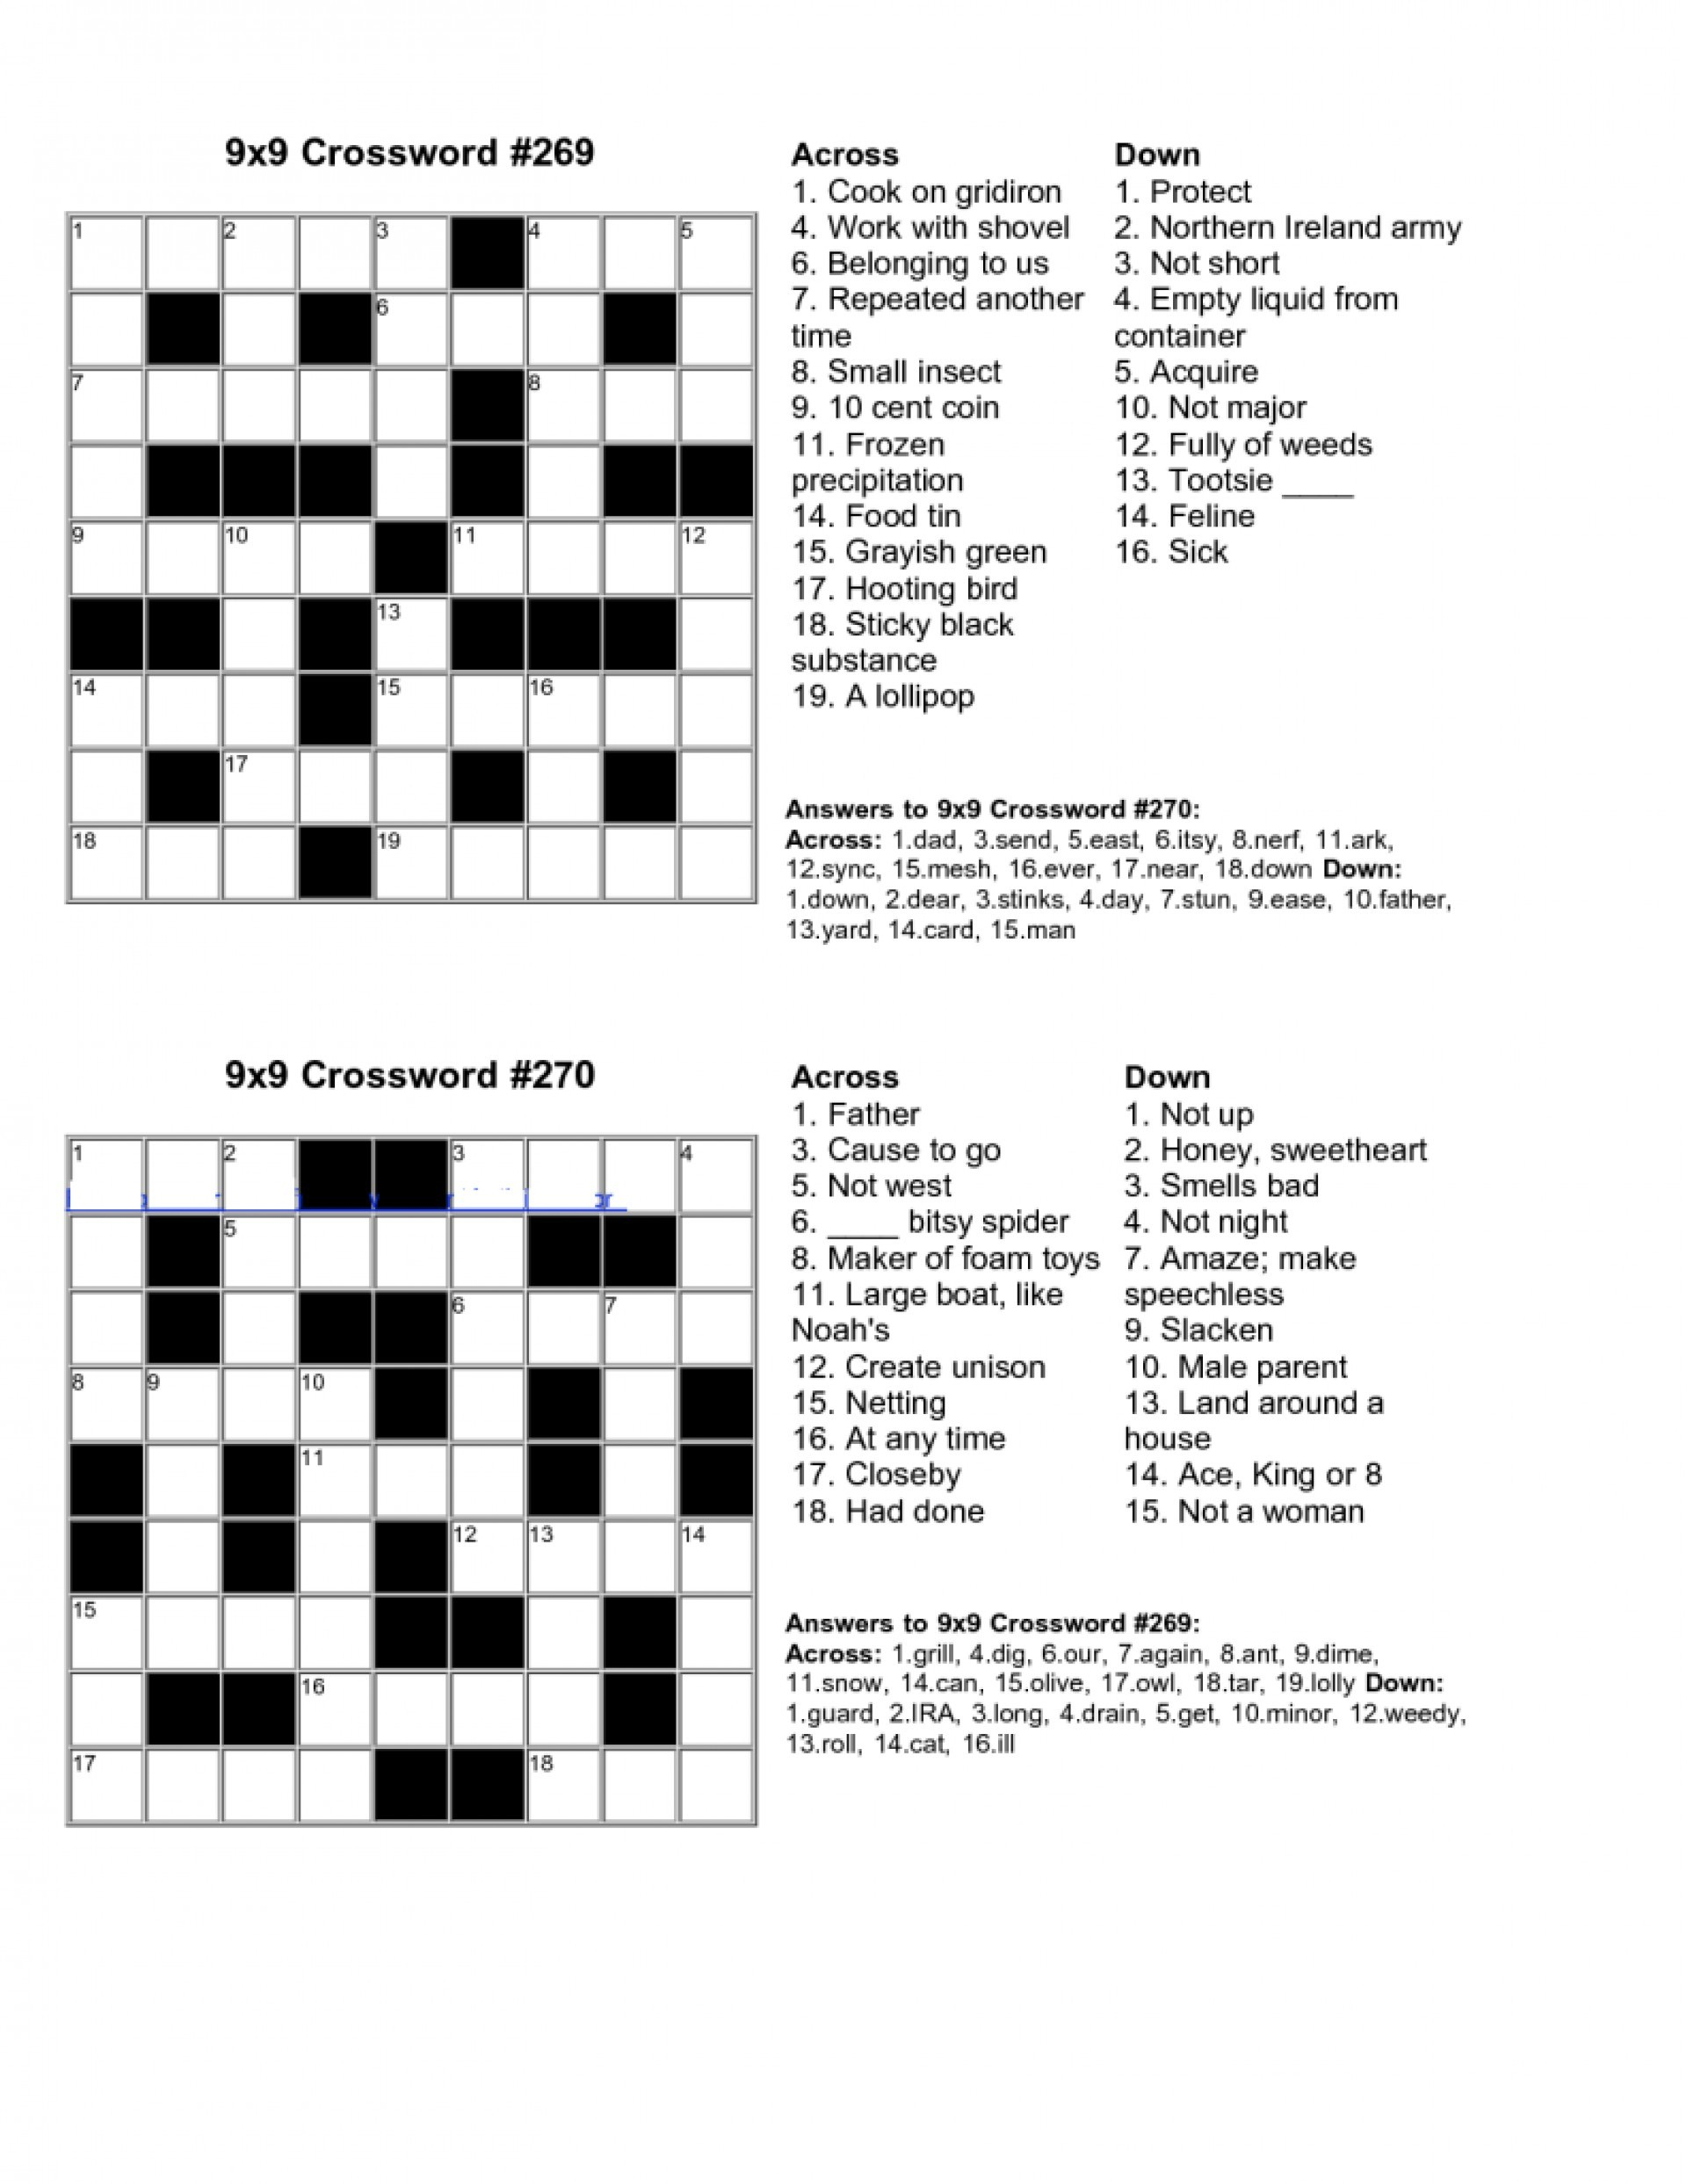 February Crossword Puzzle Printable Vpk